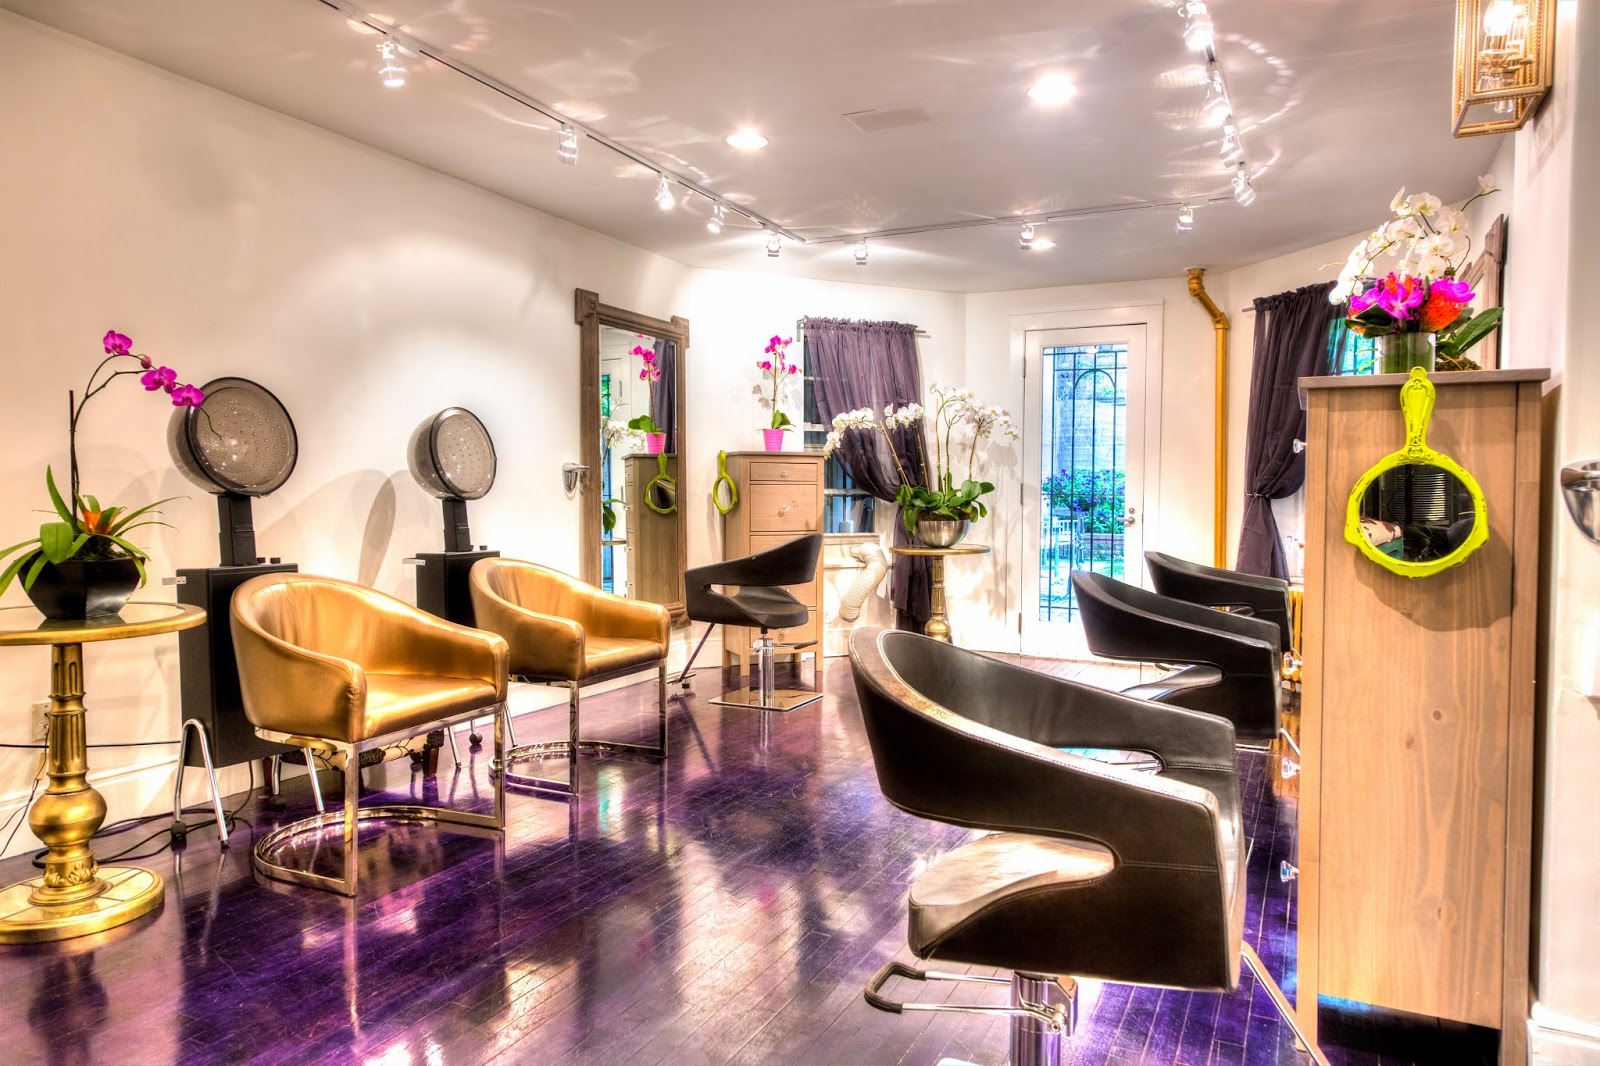 Photo of Joseph Battisti Salon in New York City, New York, United States - 2 Picture of Point of interest, Establishment, Beauty salon, Hair care